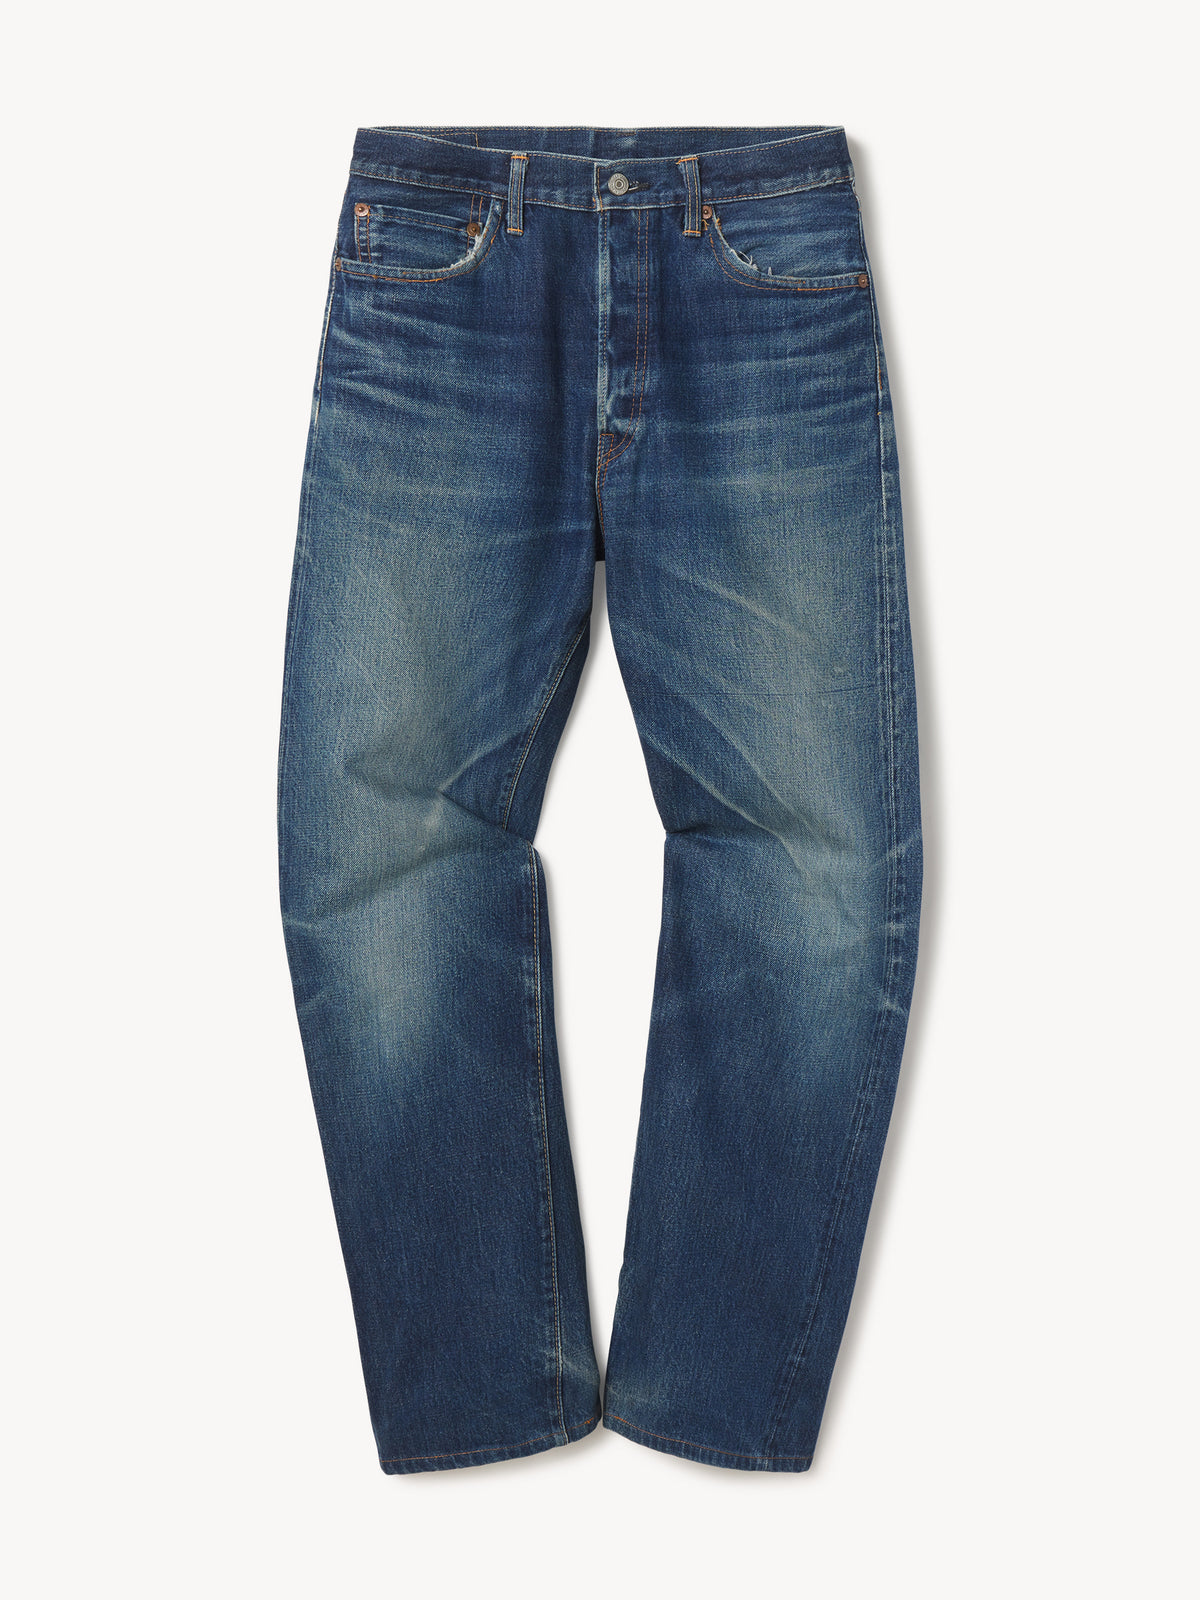 Sugarcane Jeans - 0135 - Product Flat